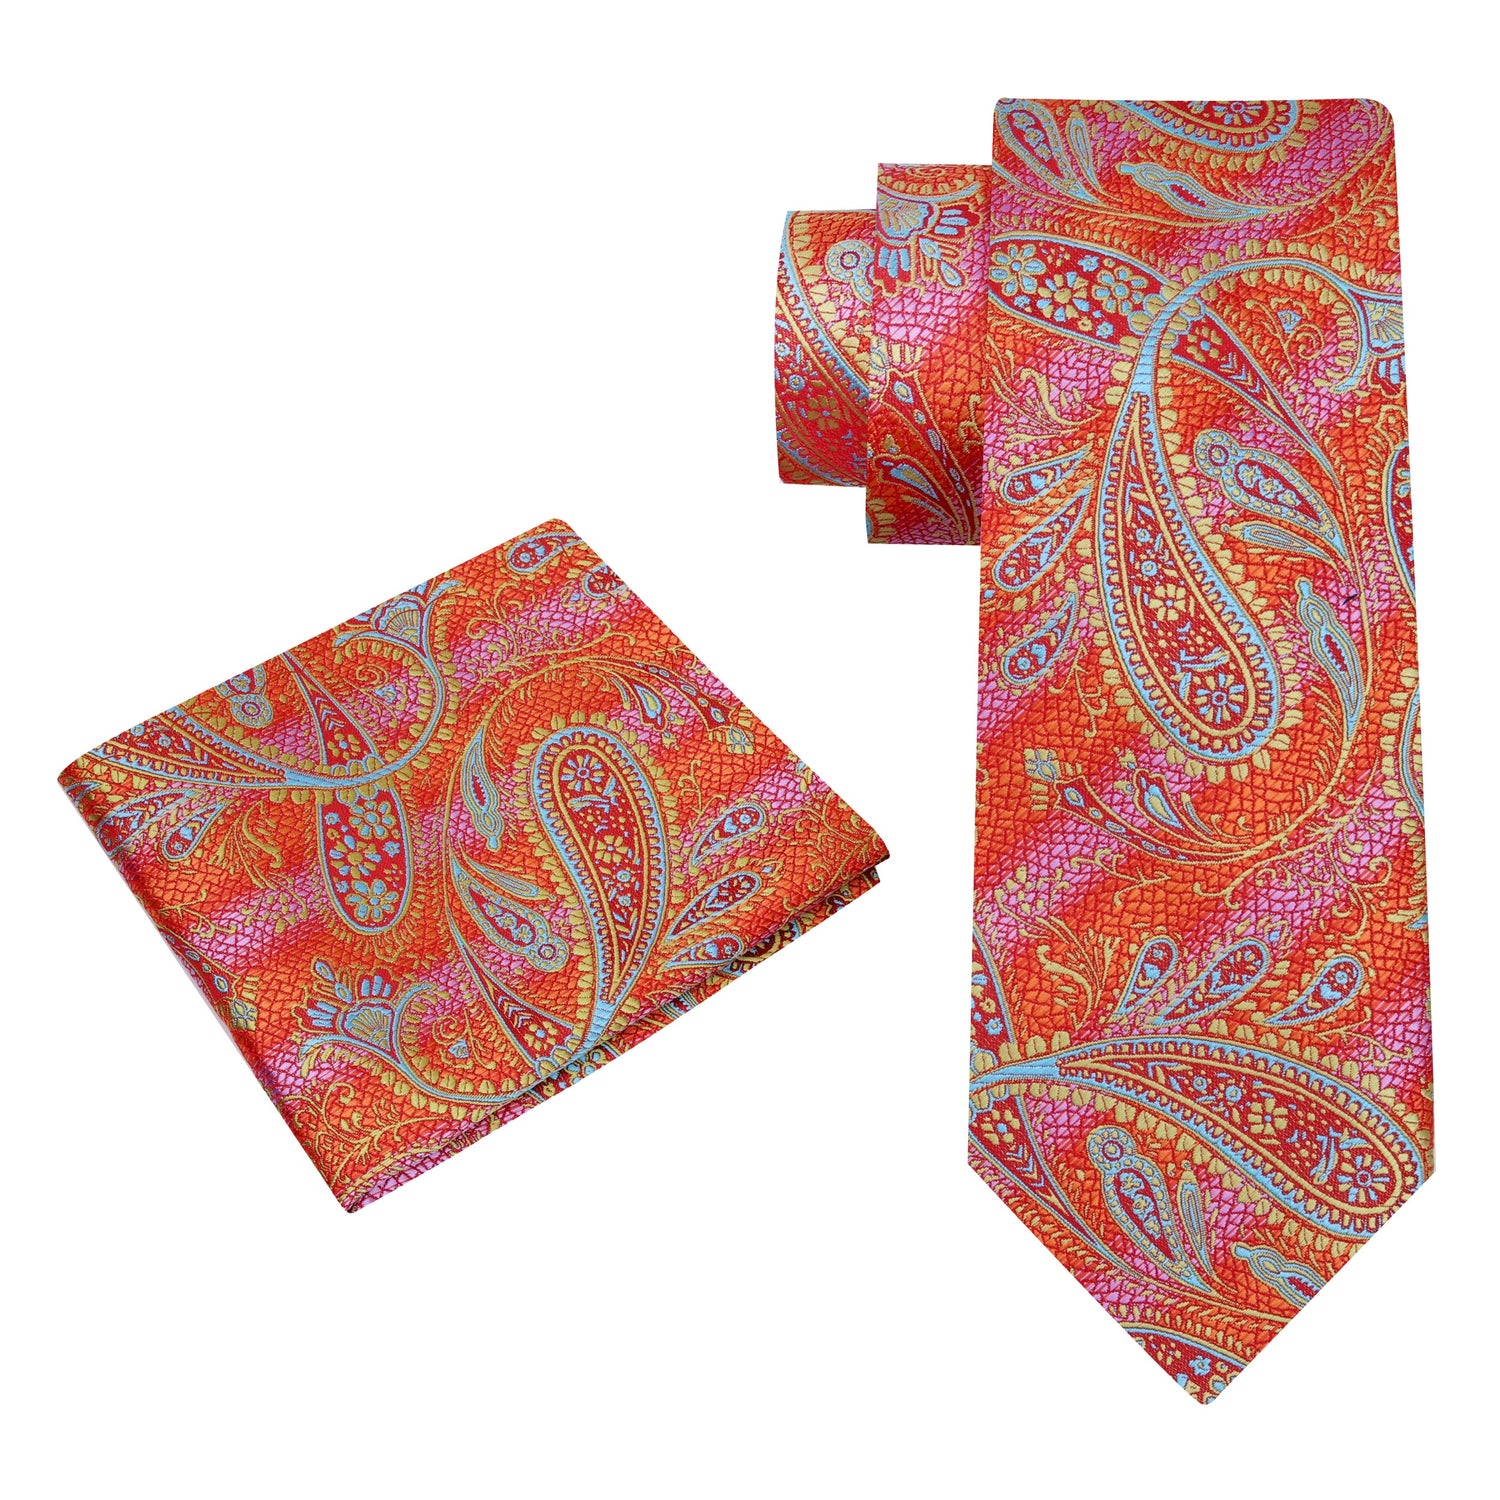 Alt View: A Orange Paisley Pattern Silk Necktie, Matching Pocket Square